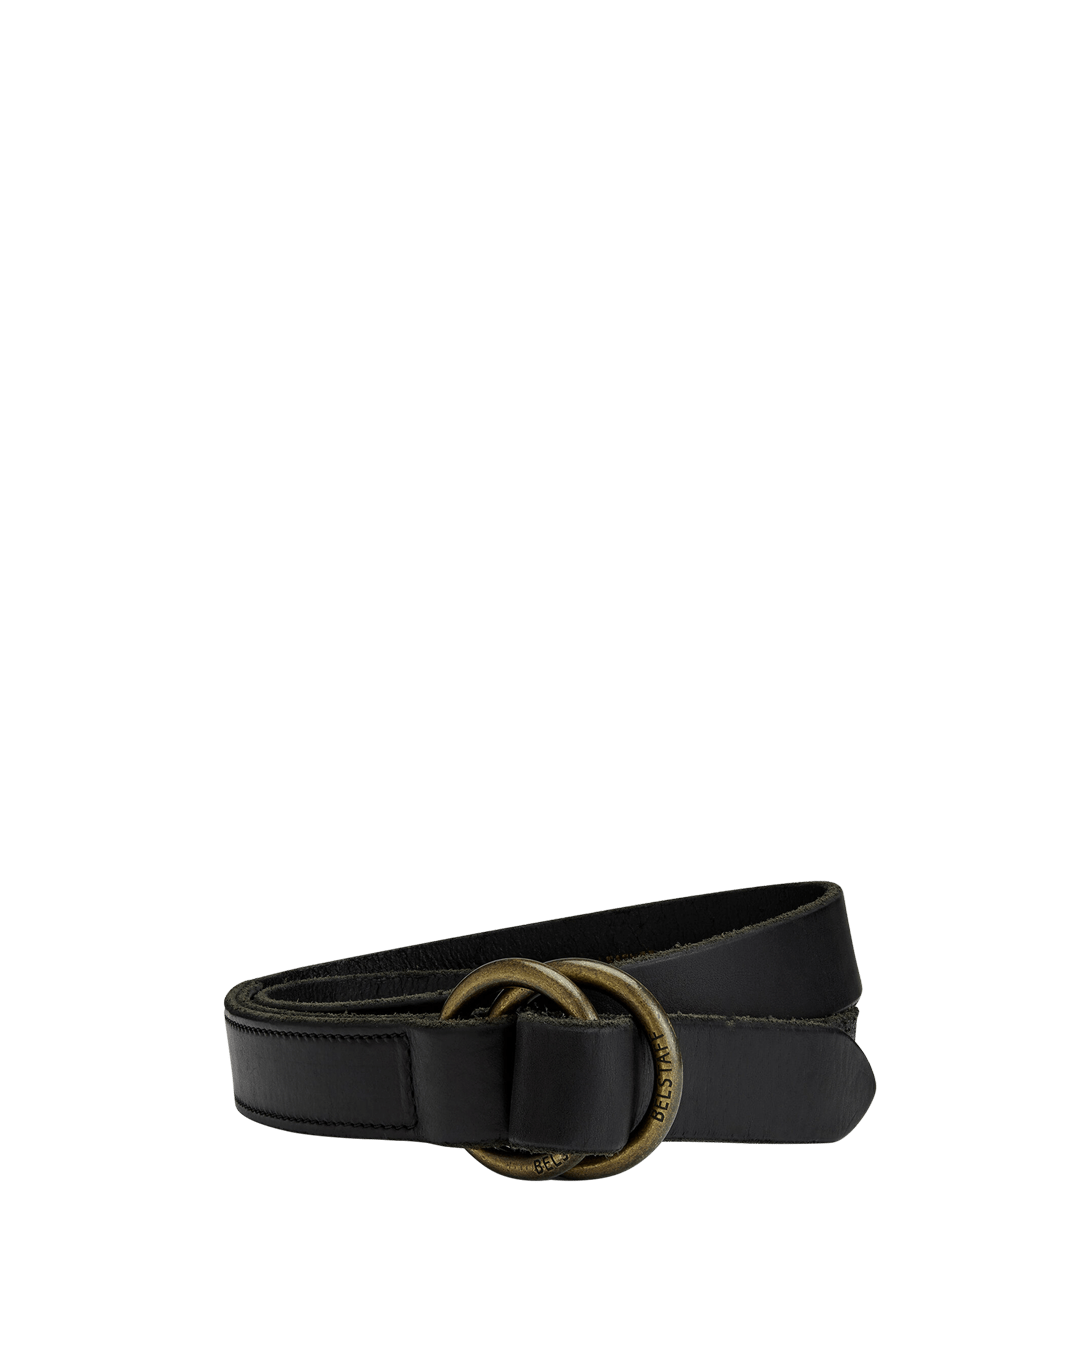 Belstaff Collier Belt, black (3 cm) | Gotlands Fashion